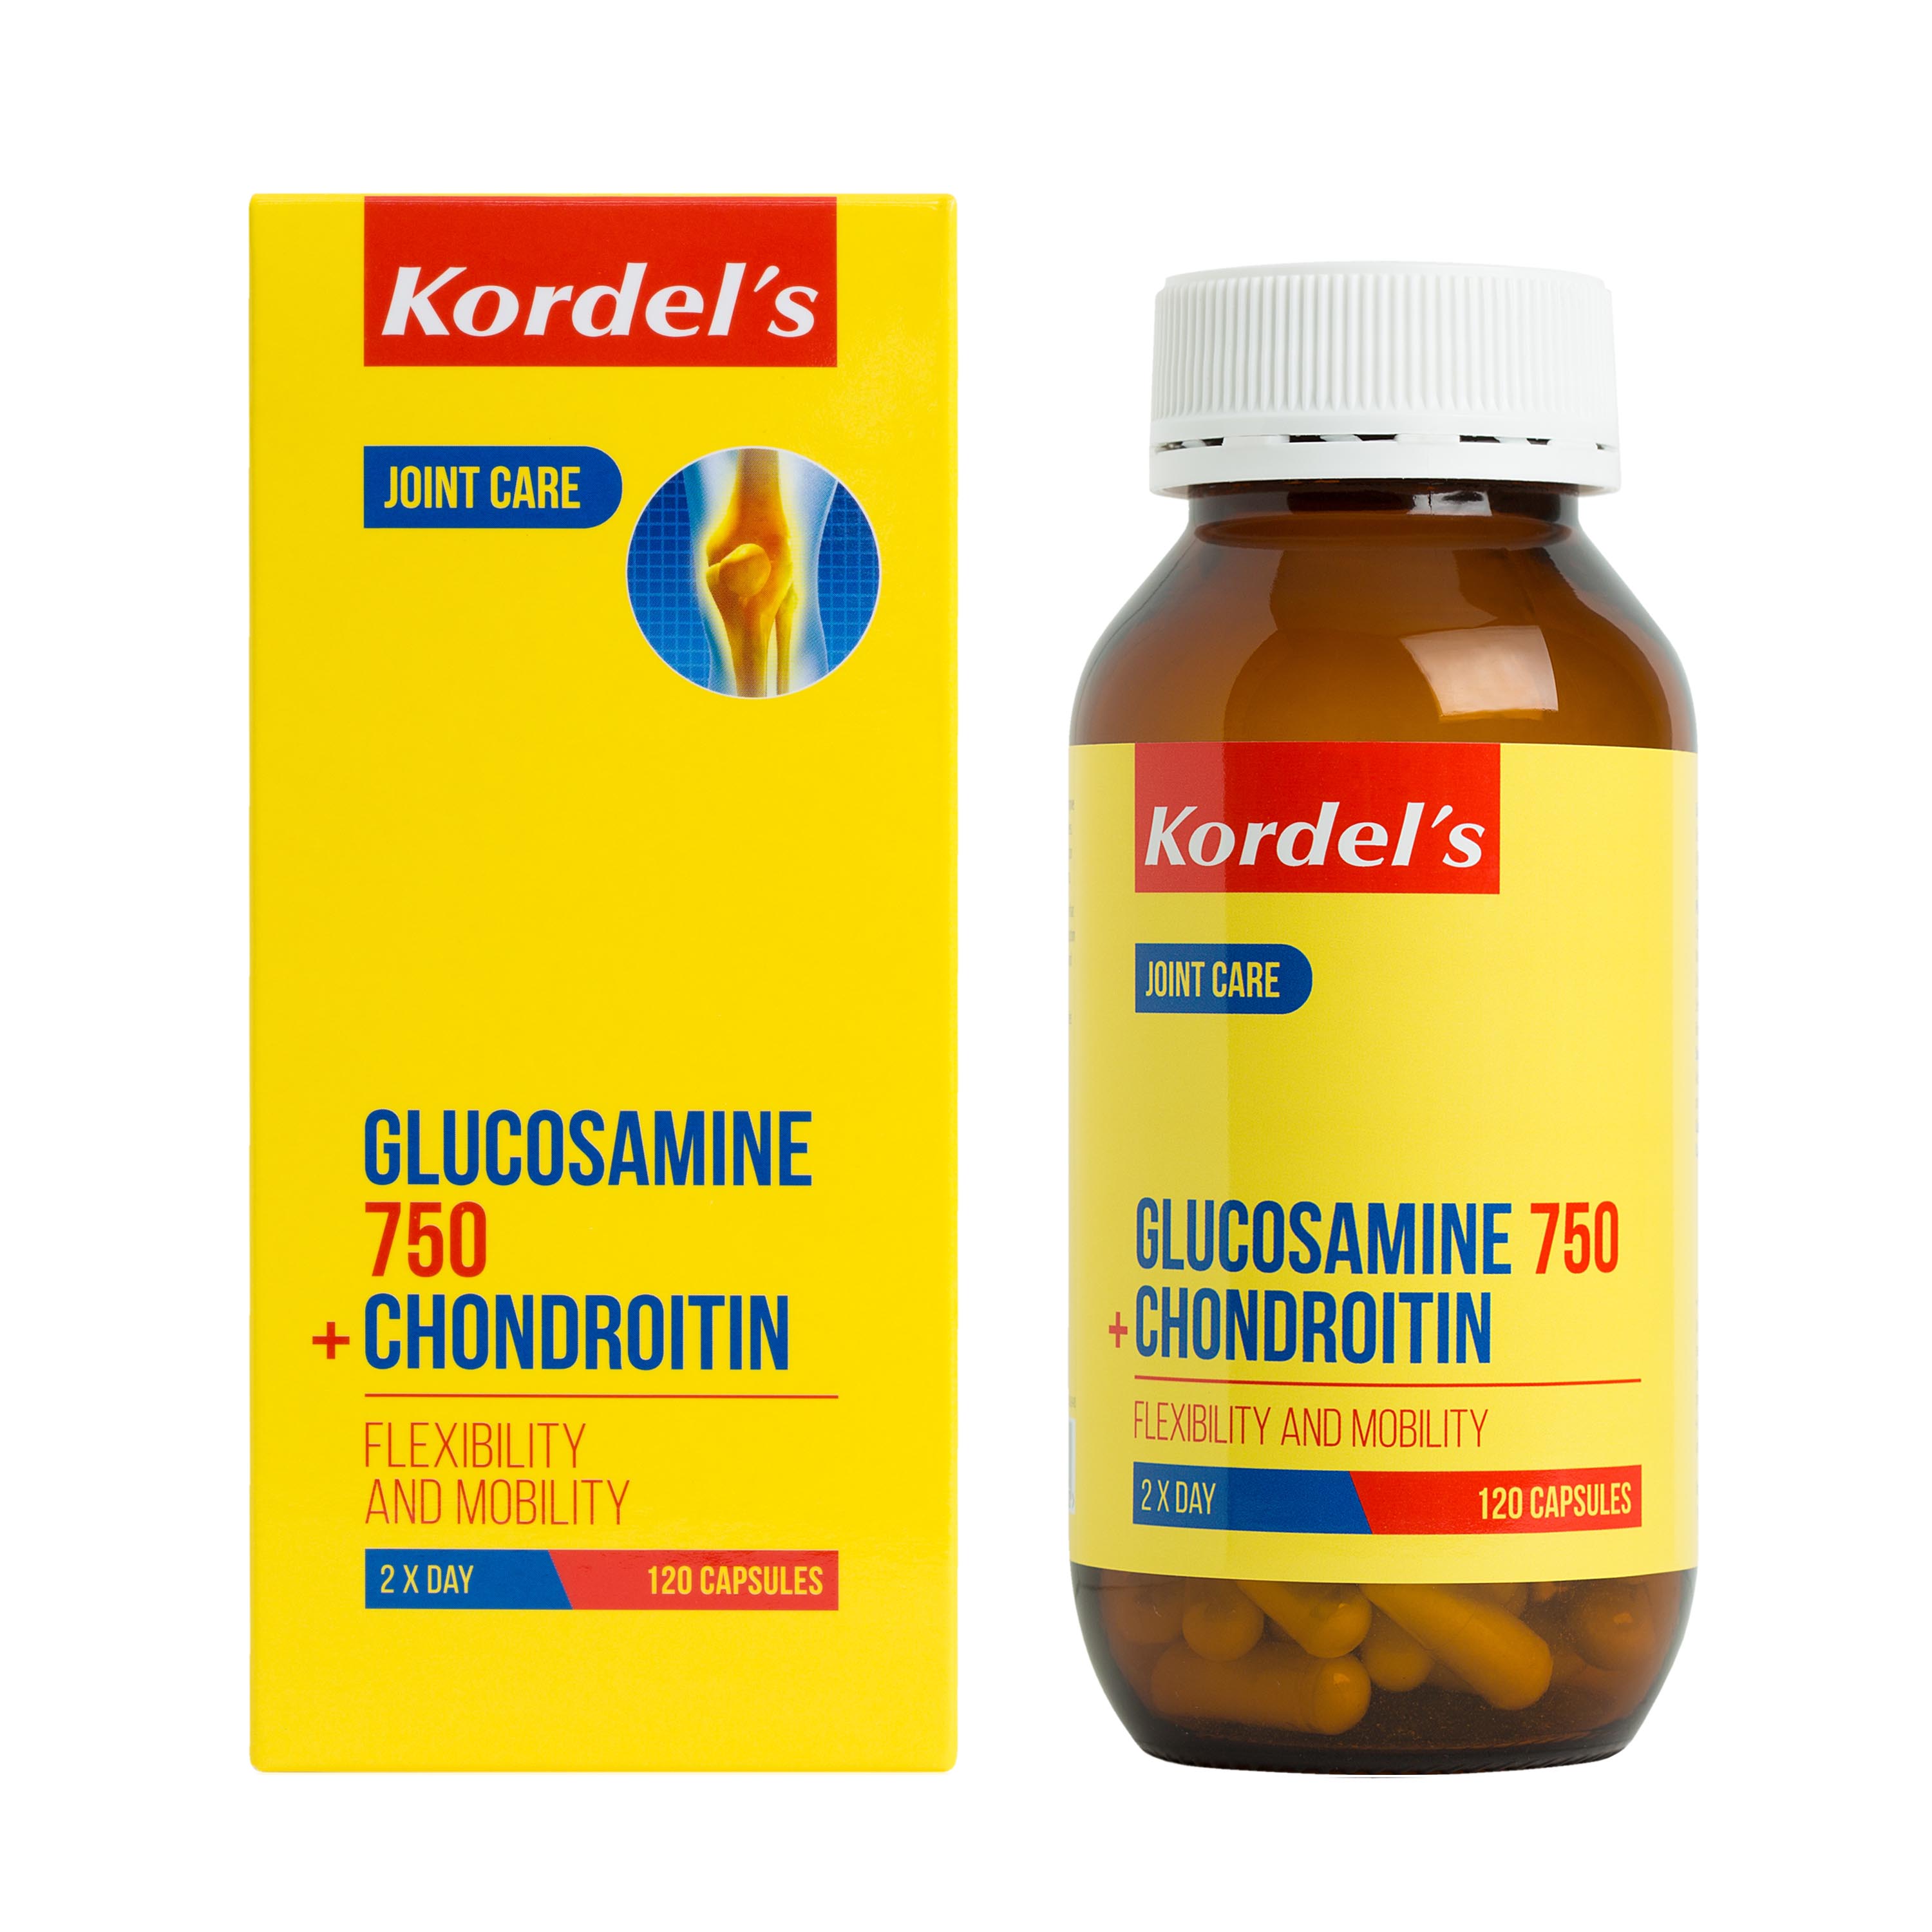 Kordel's Glucosamine 750 + Chondroitin 120 Capsules